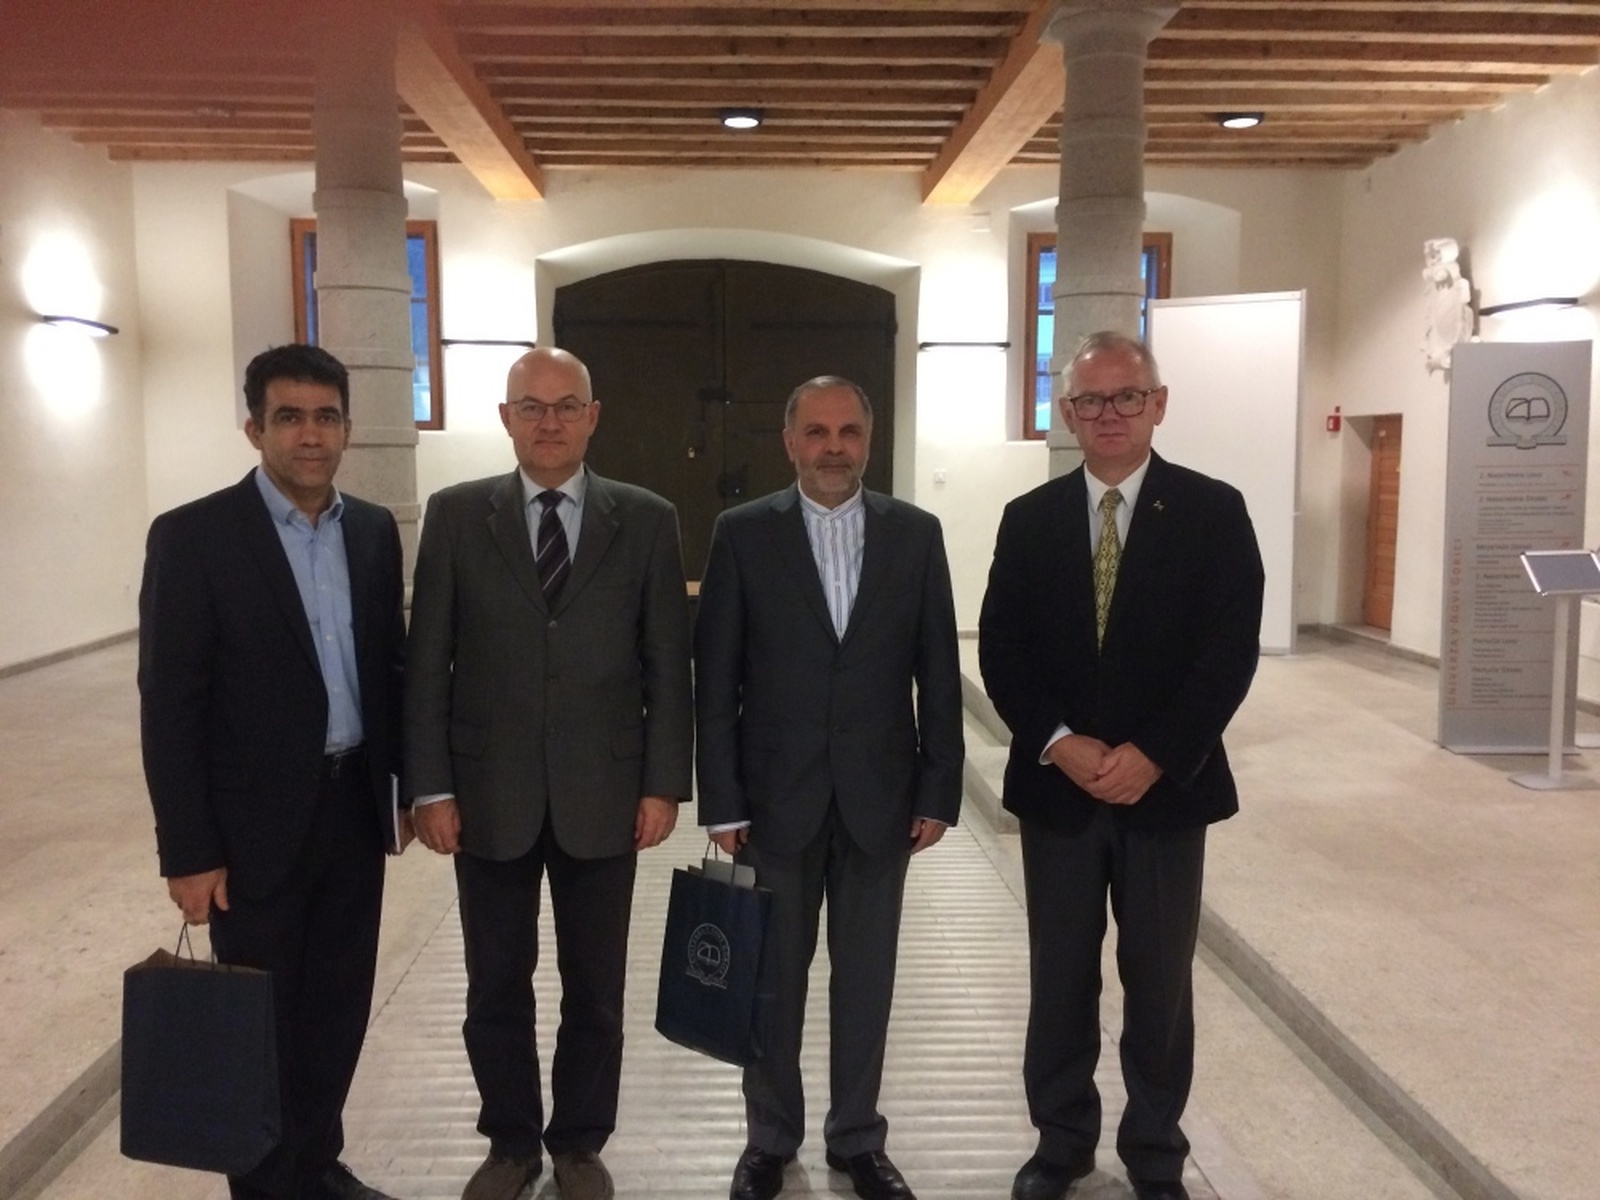 The Visit of the Ambassador of the Islamic Republic of Iran at the University of Nova Gorica